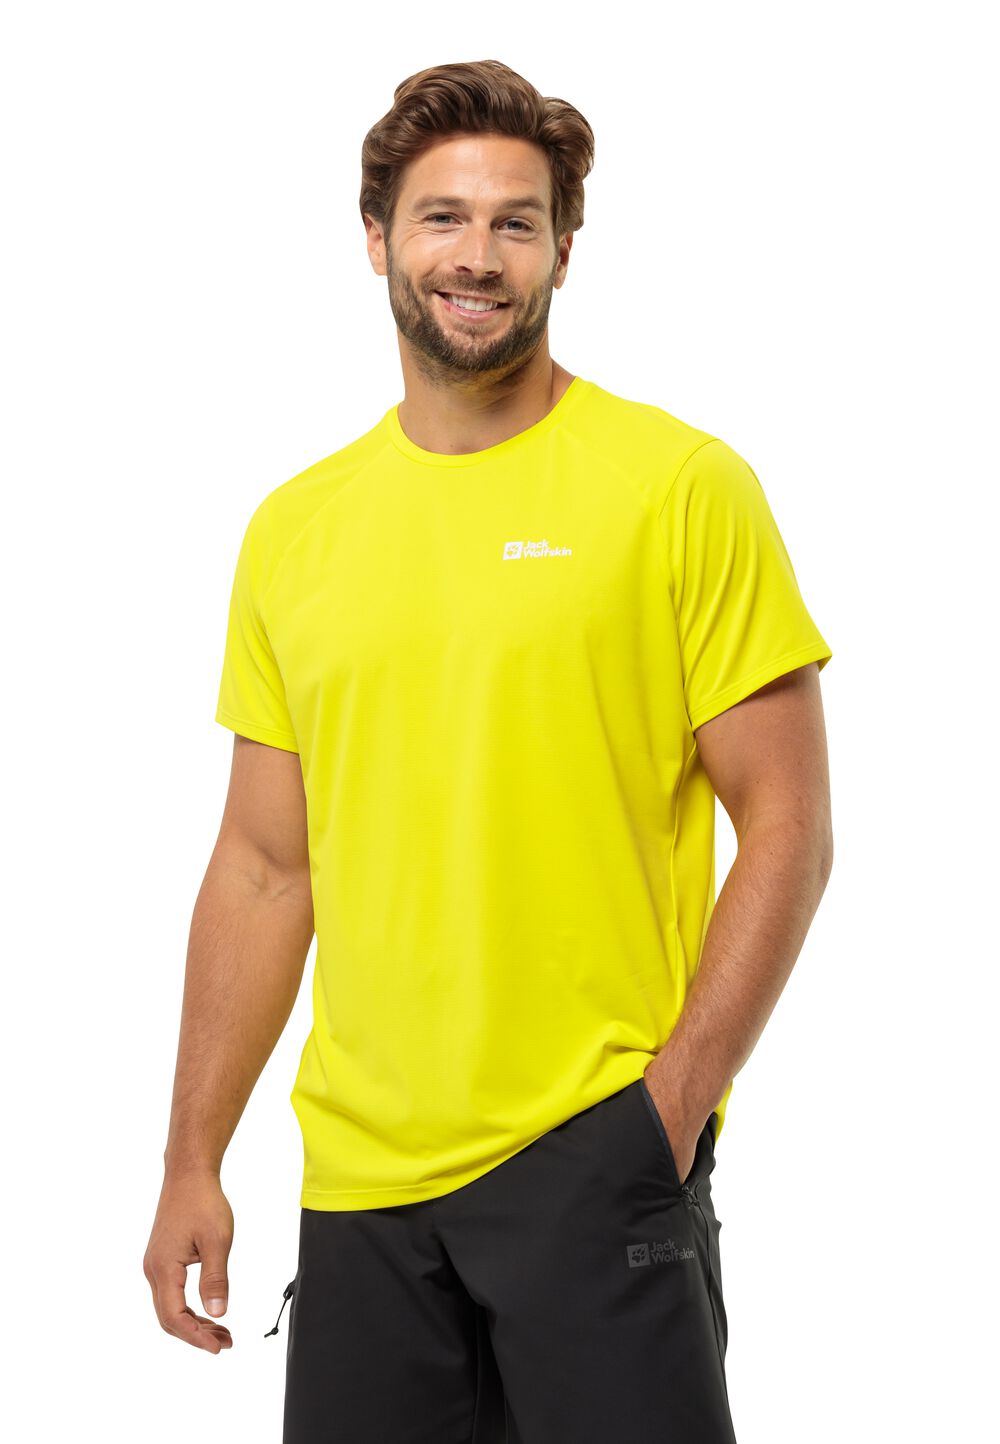 Jack Wolfskin Prelight Trail T-Shirt Men Functioneel shirt Heren XXL oranje firefly